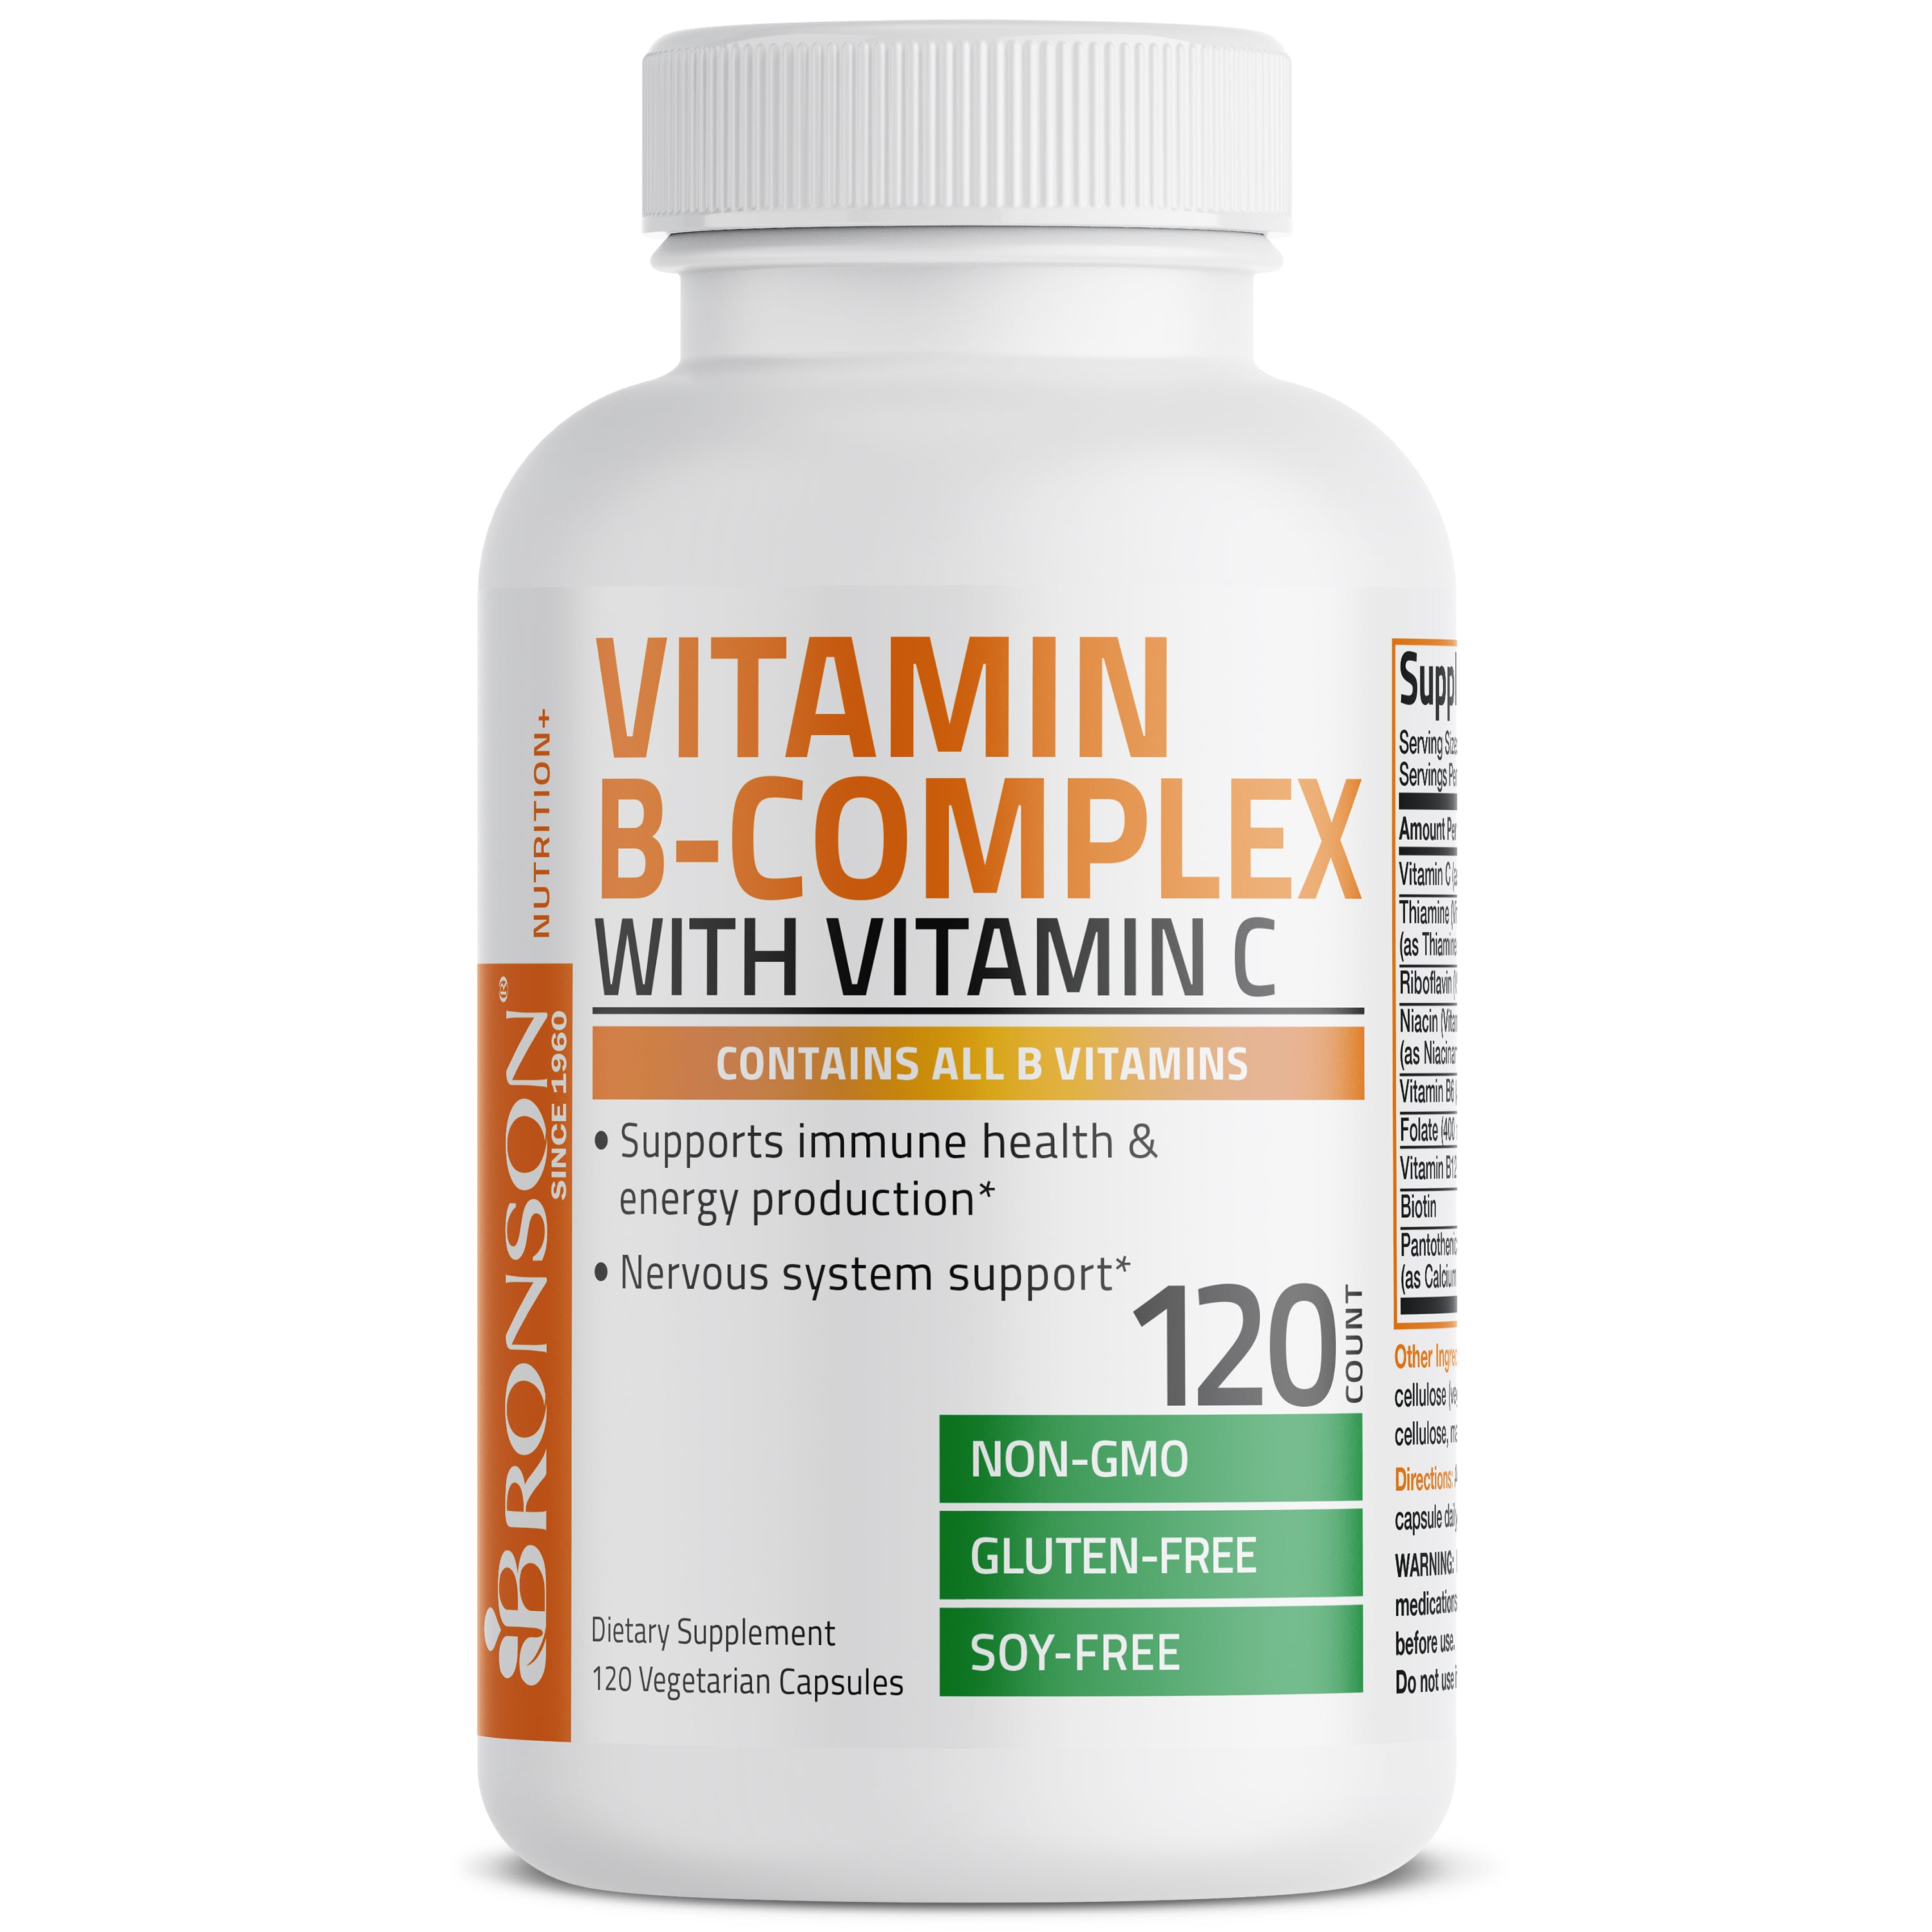 Vitamin B Complex with Vitamin C view 2 of 6